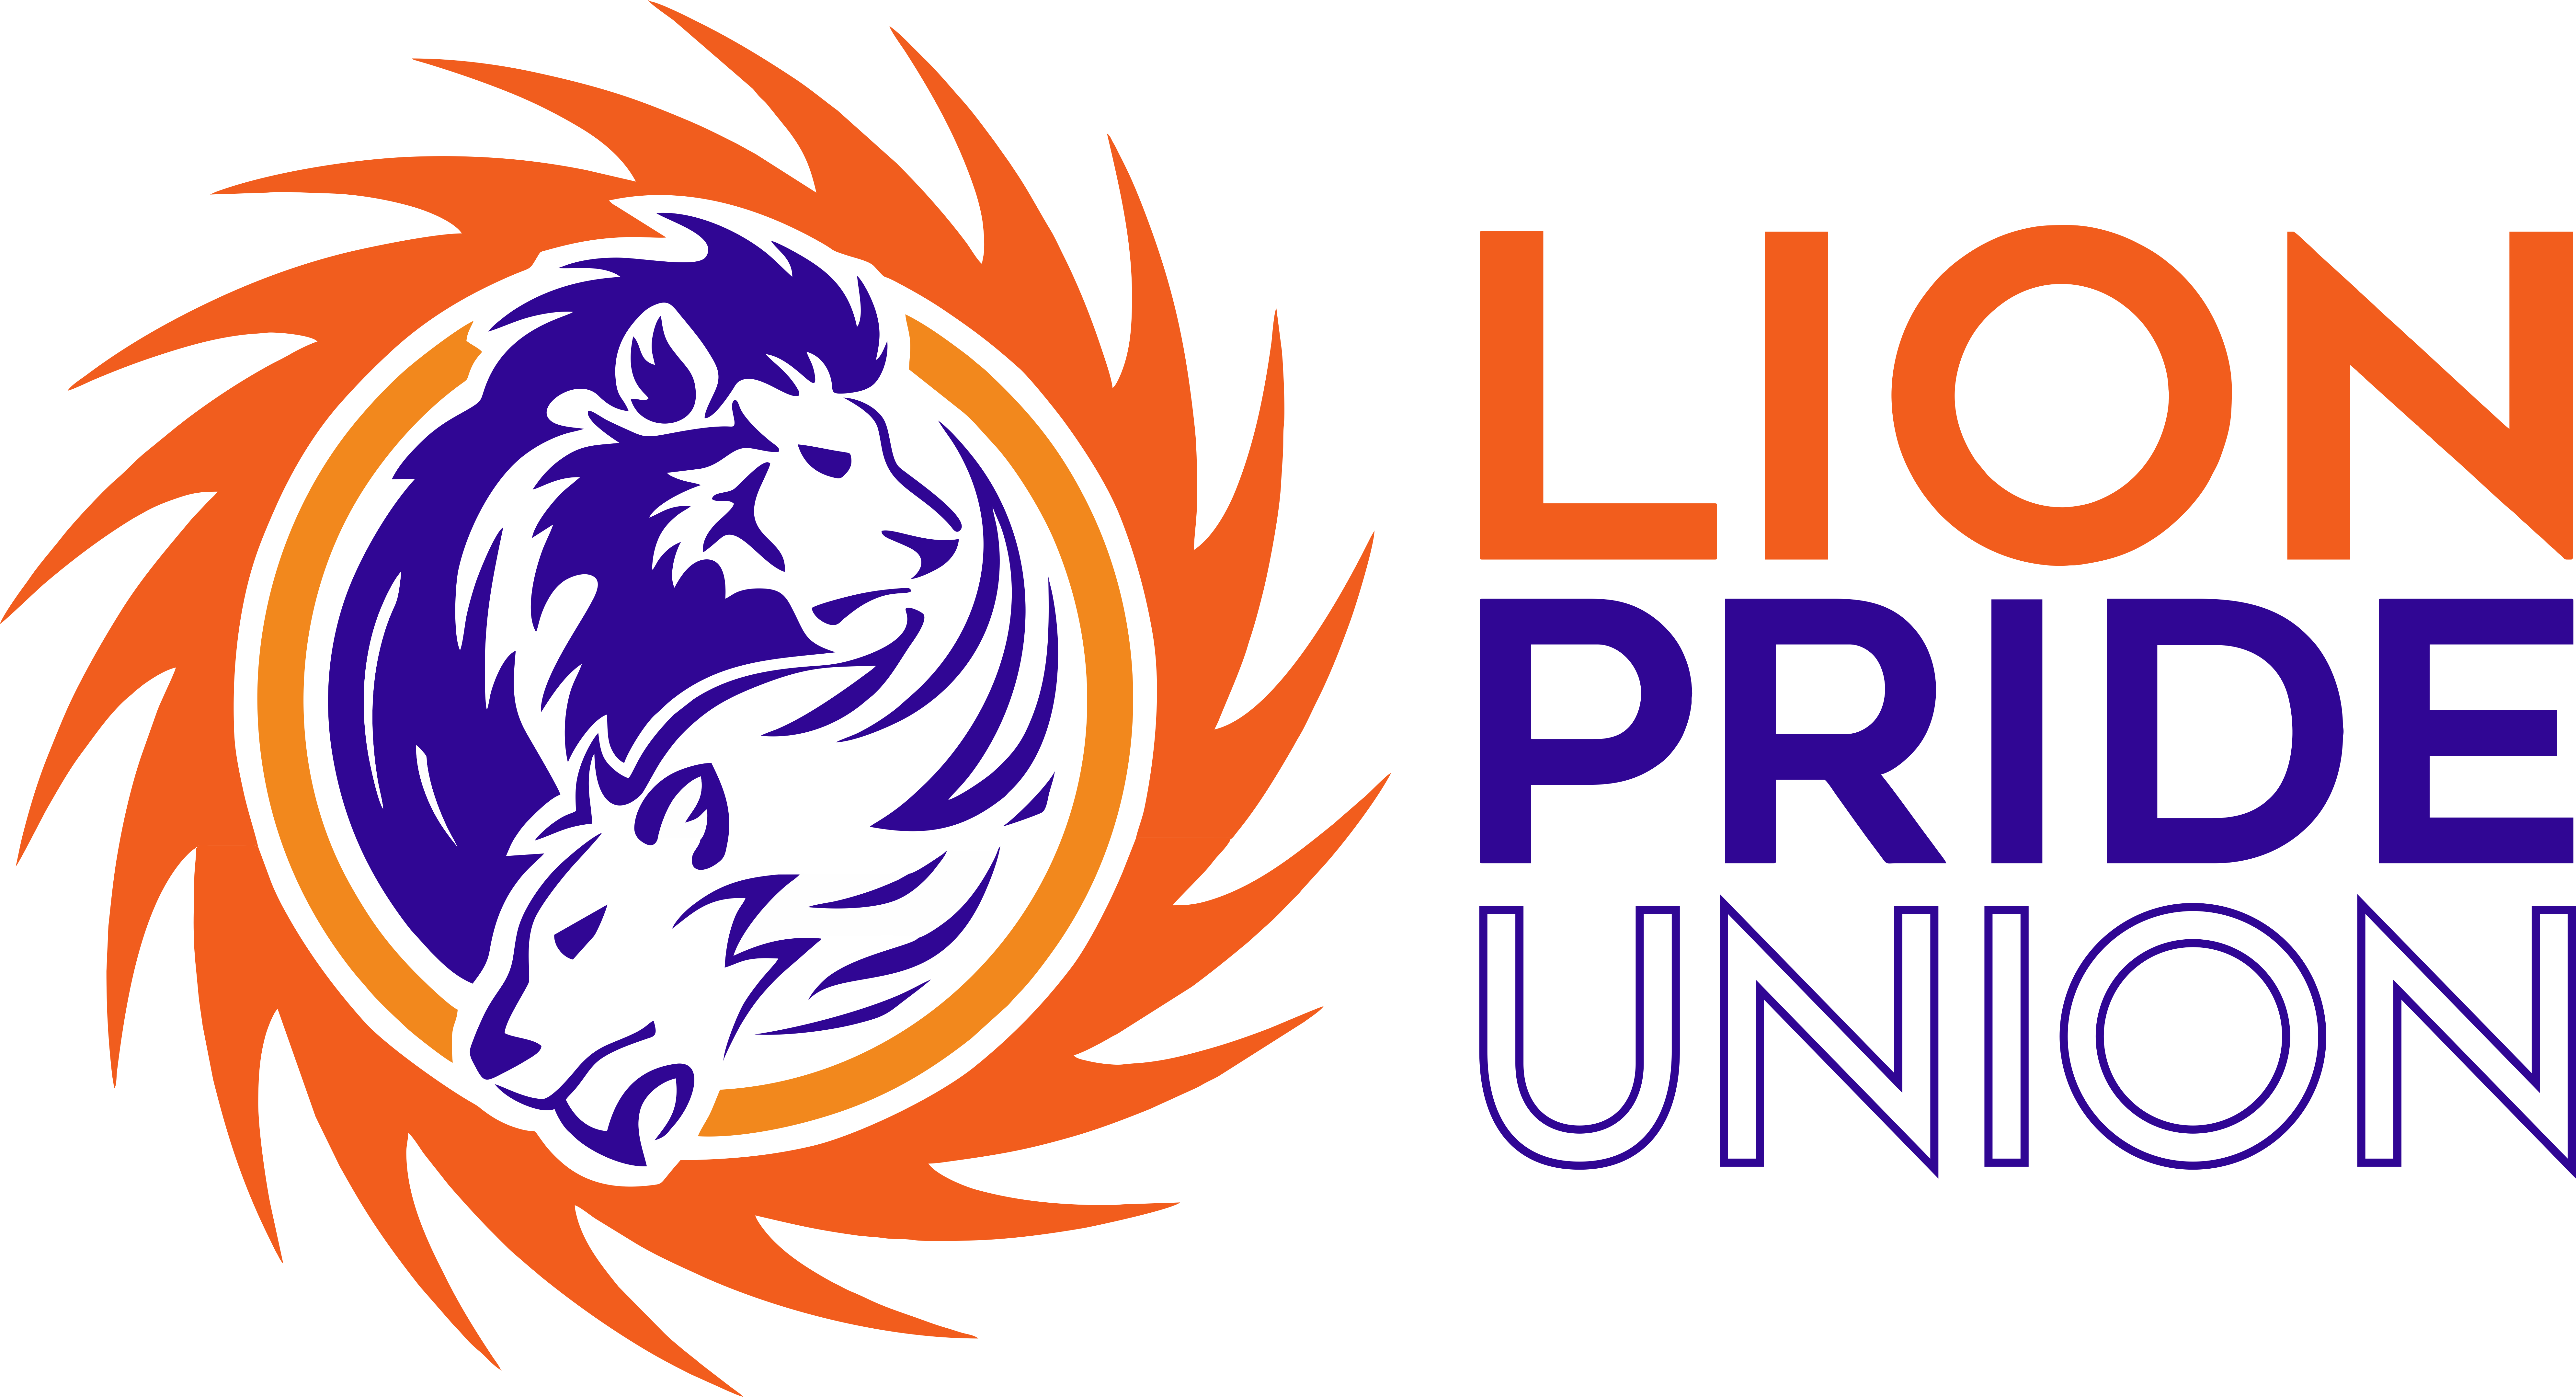 Lion Pride - Union